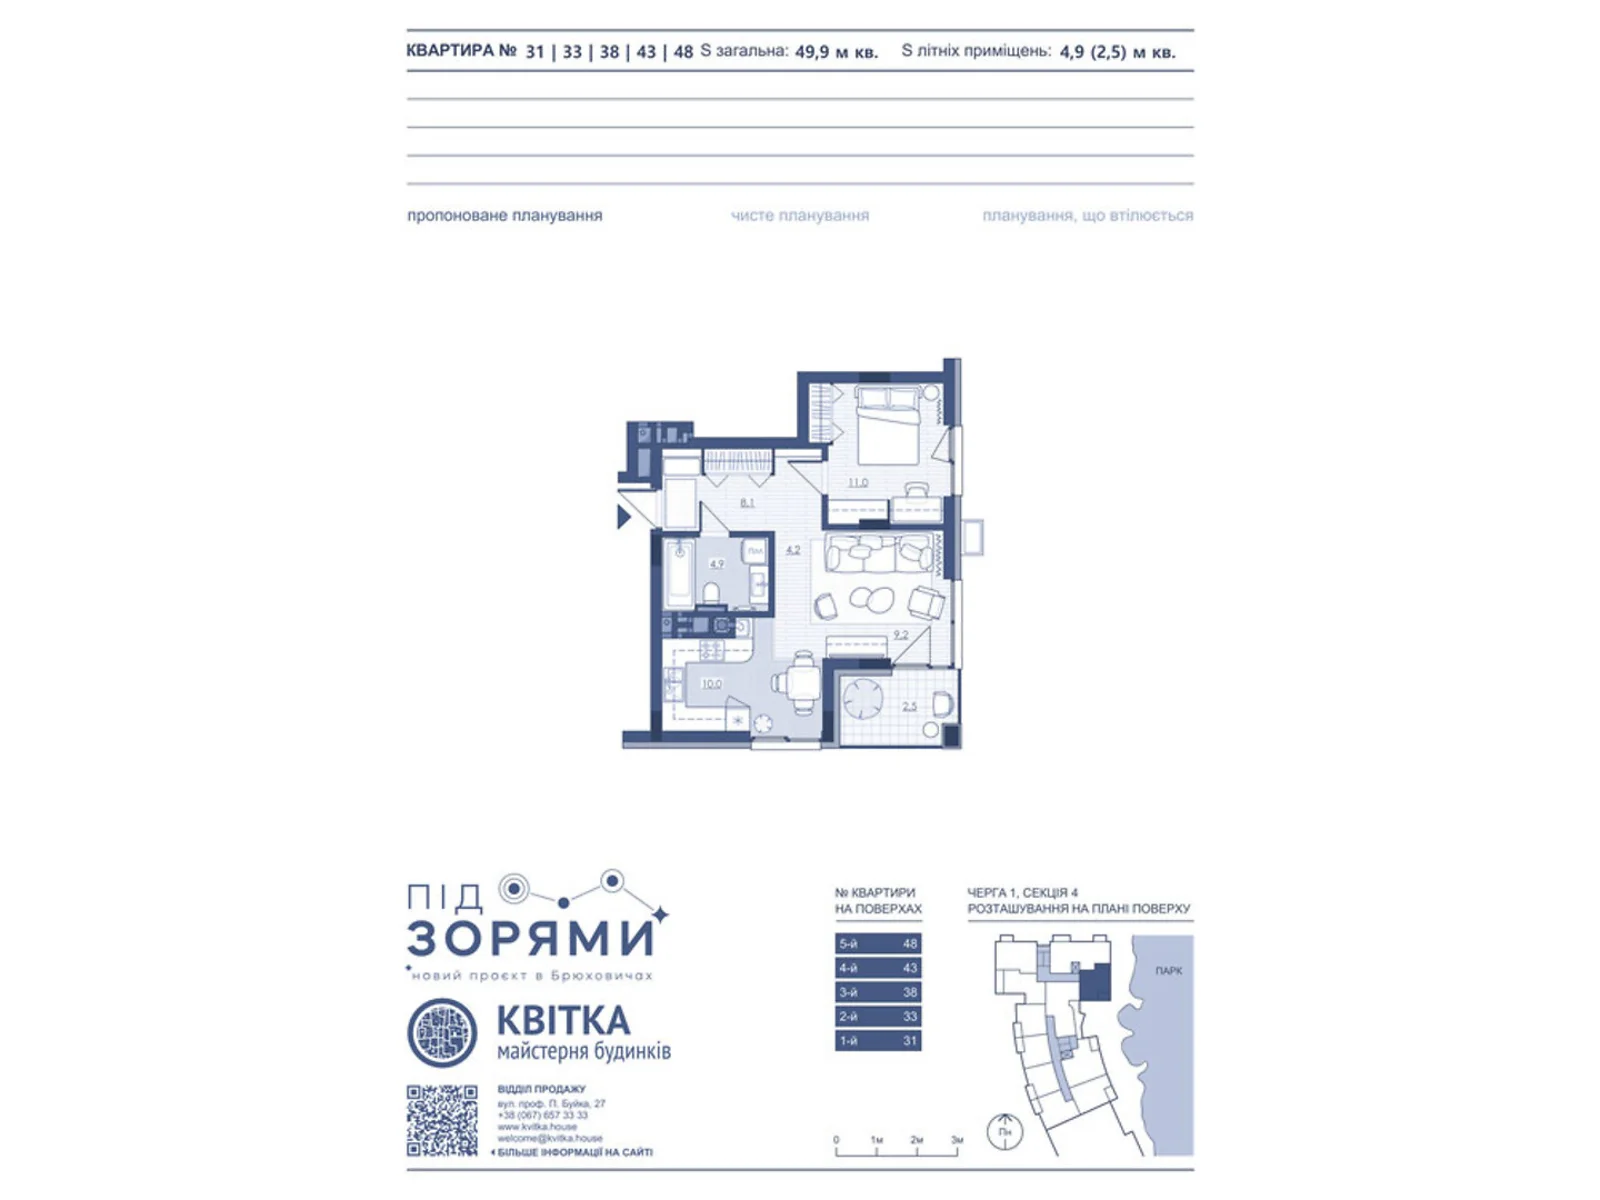 Продается 1-комнатная квартира 49.9 кв. м в Брюховичах, цена: 49401 $ - фото 1